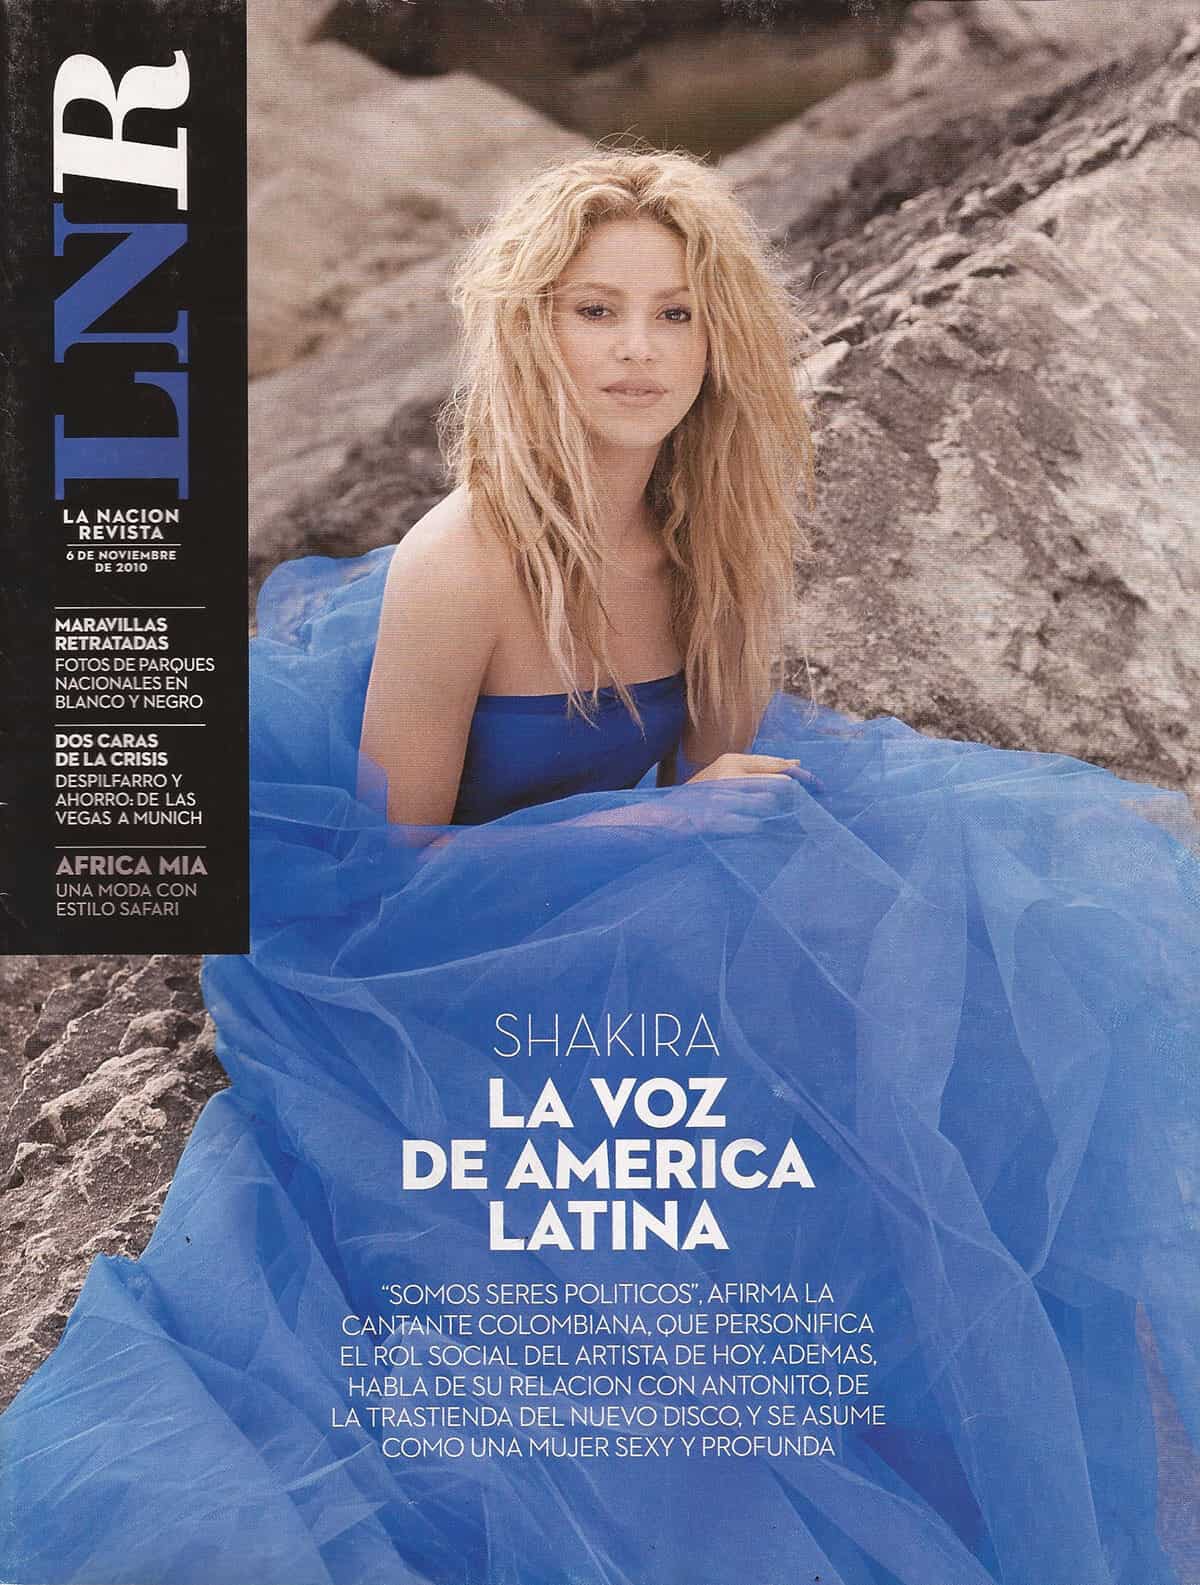 La Nacion Revista 11-2010 – 01